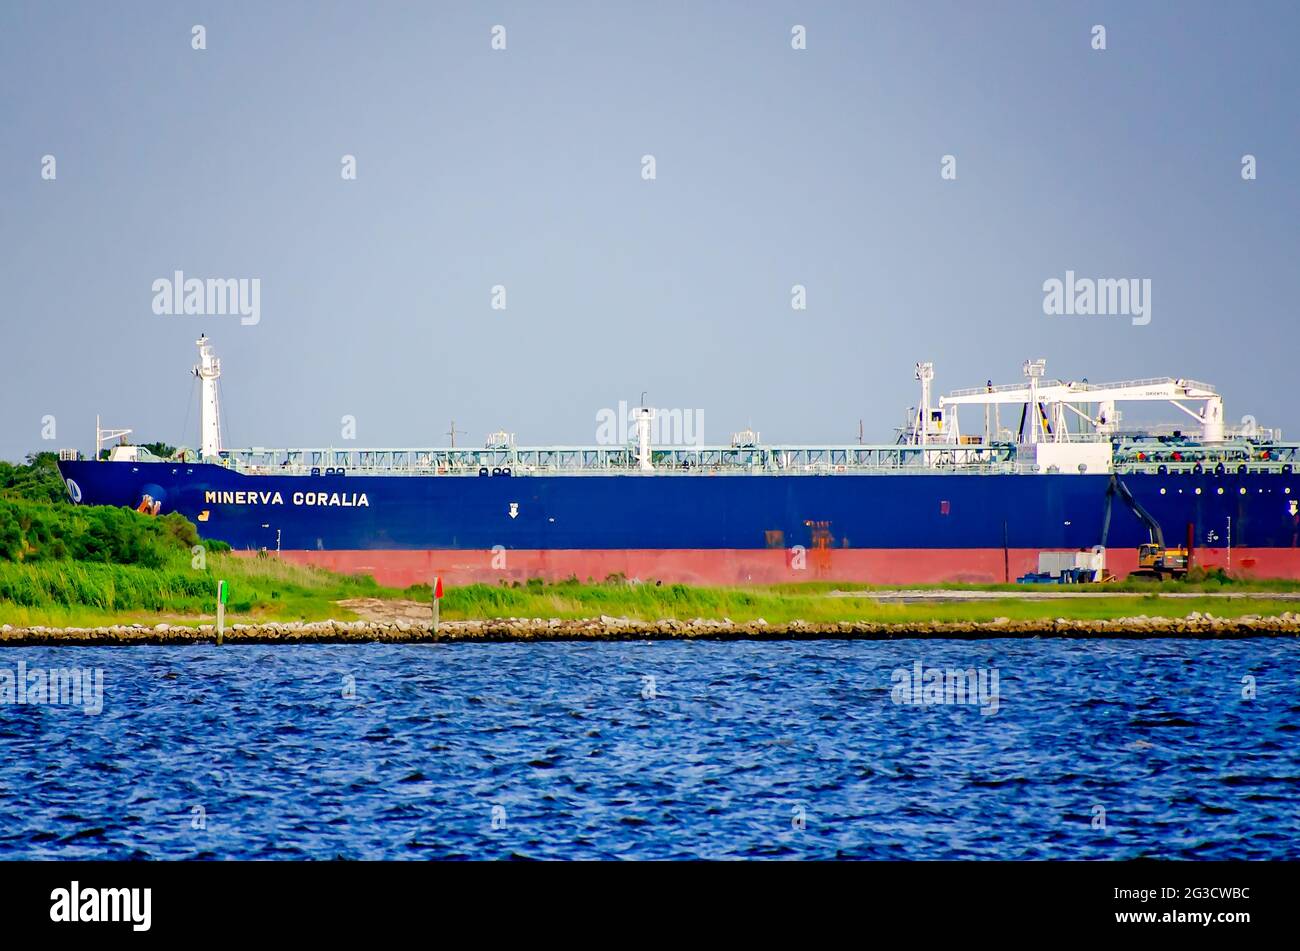 Crude oil tanker Minerva Coralia is docked, June 12, 2021, in Pascagoula, Mississippi. Minerva Coralia was built in 2017. Stock Photo